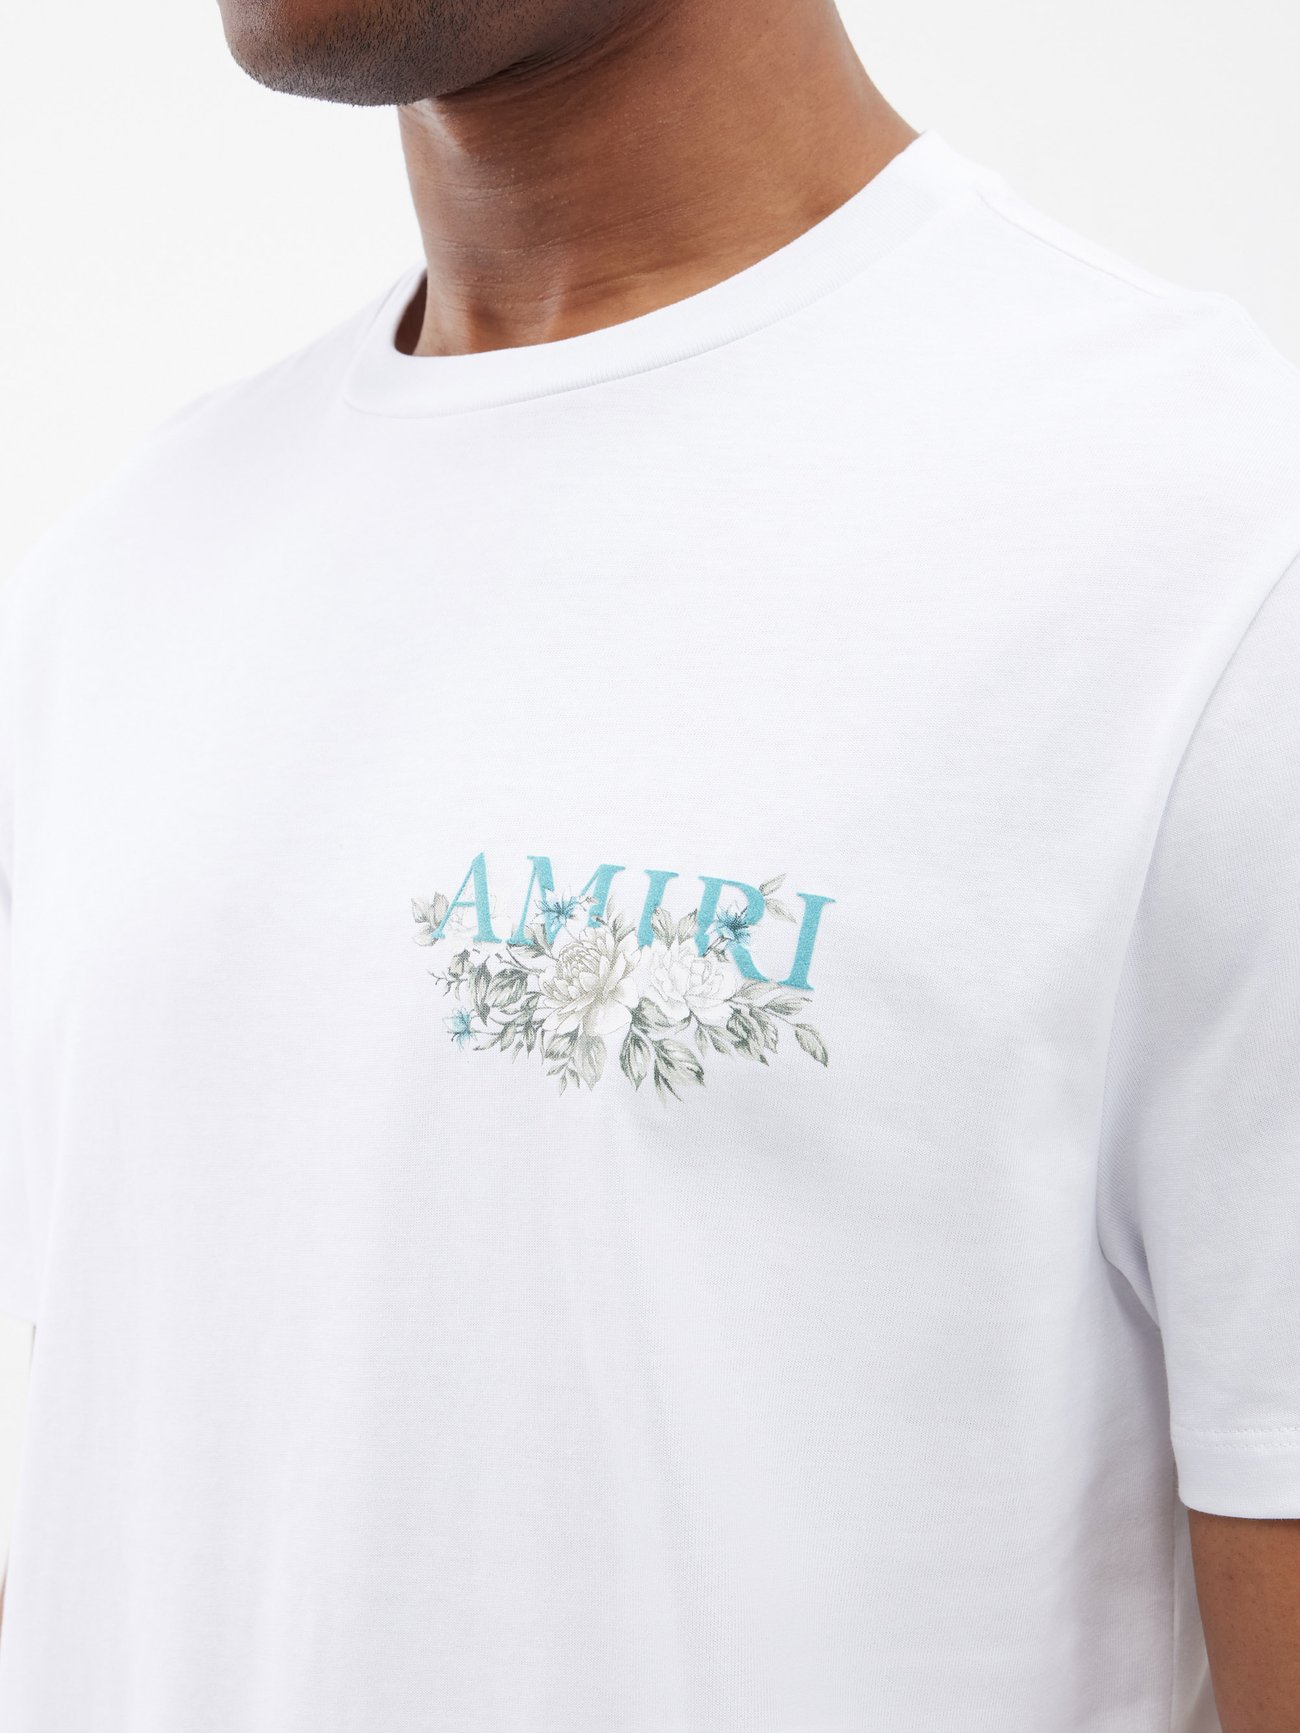 Amiri Men's Floral Logo T-Shirt - Bergdorf Goodman